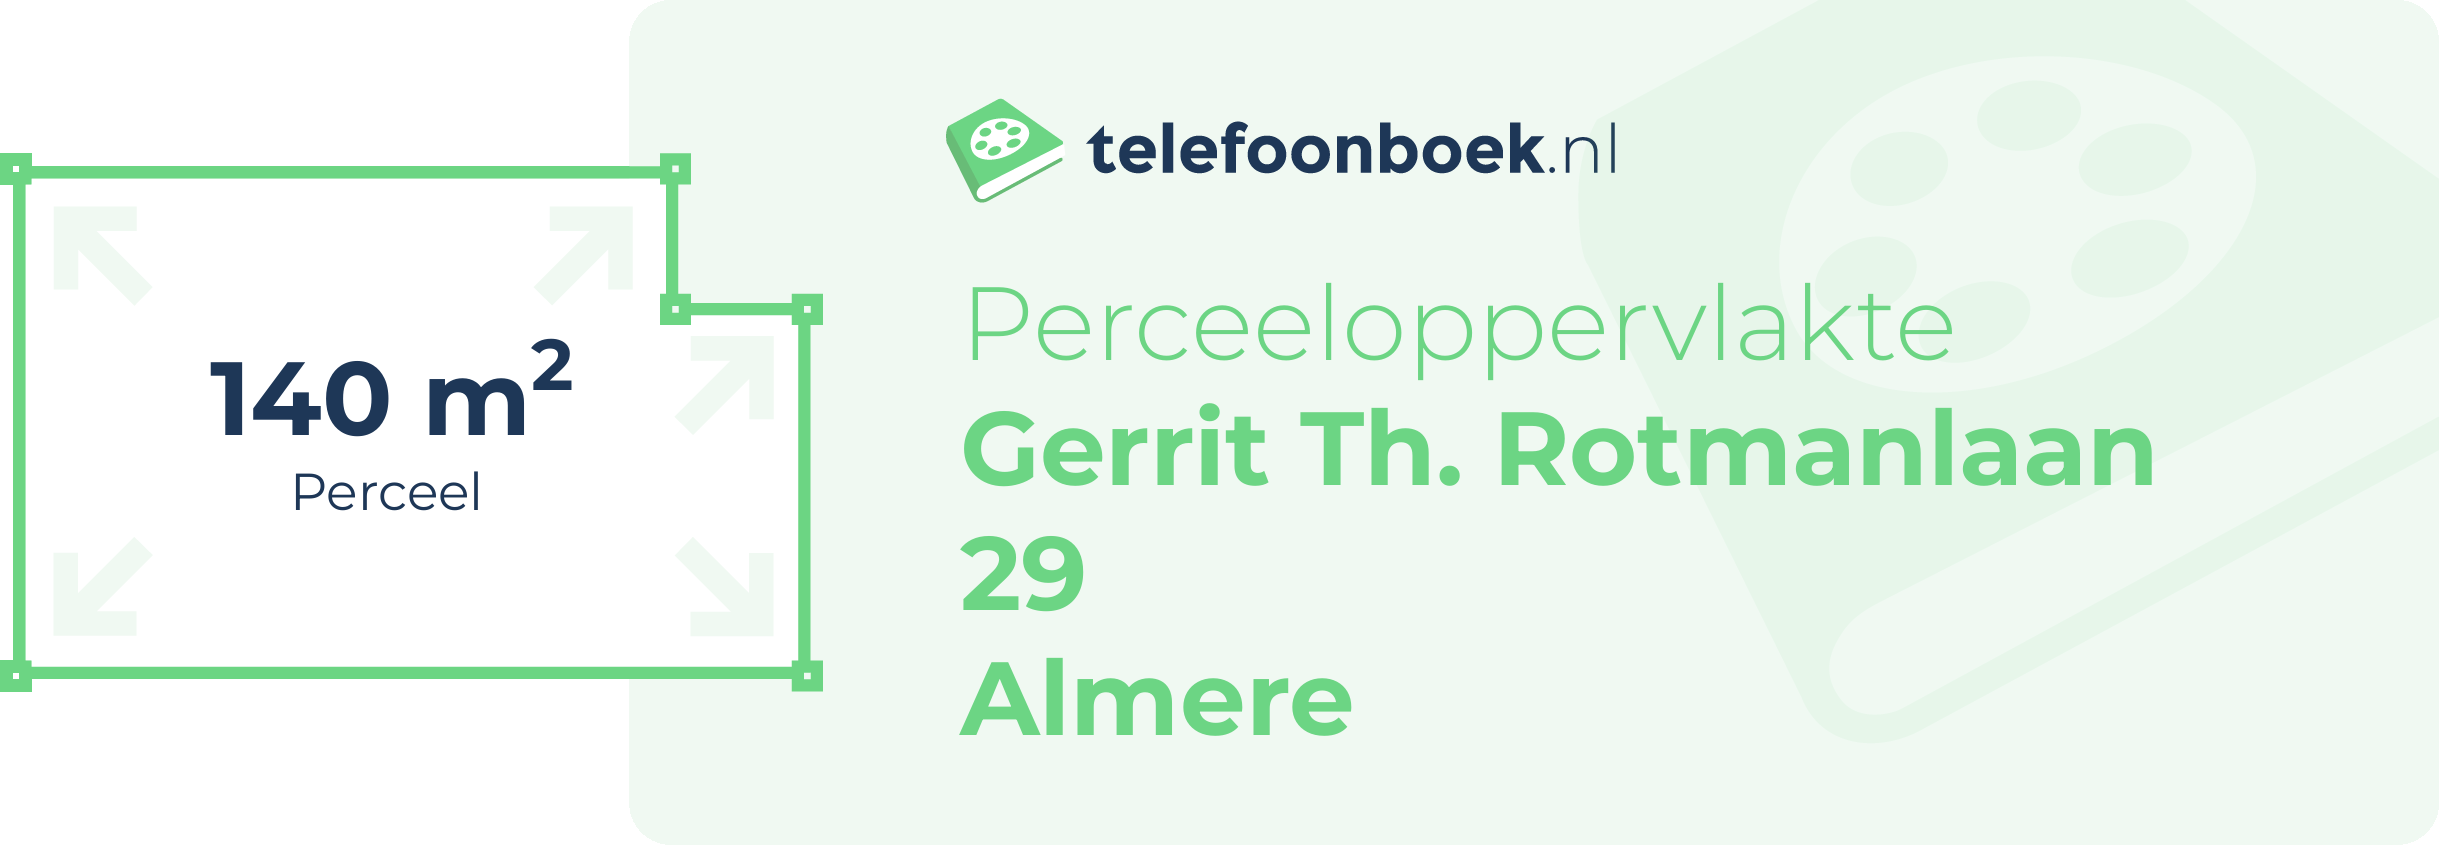 Perceeloppervlakte Gerrit Th. Rotmanlaan 29 Almere